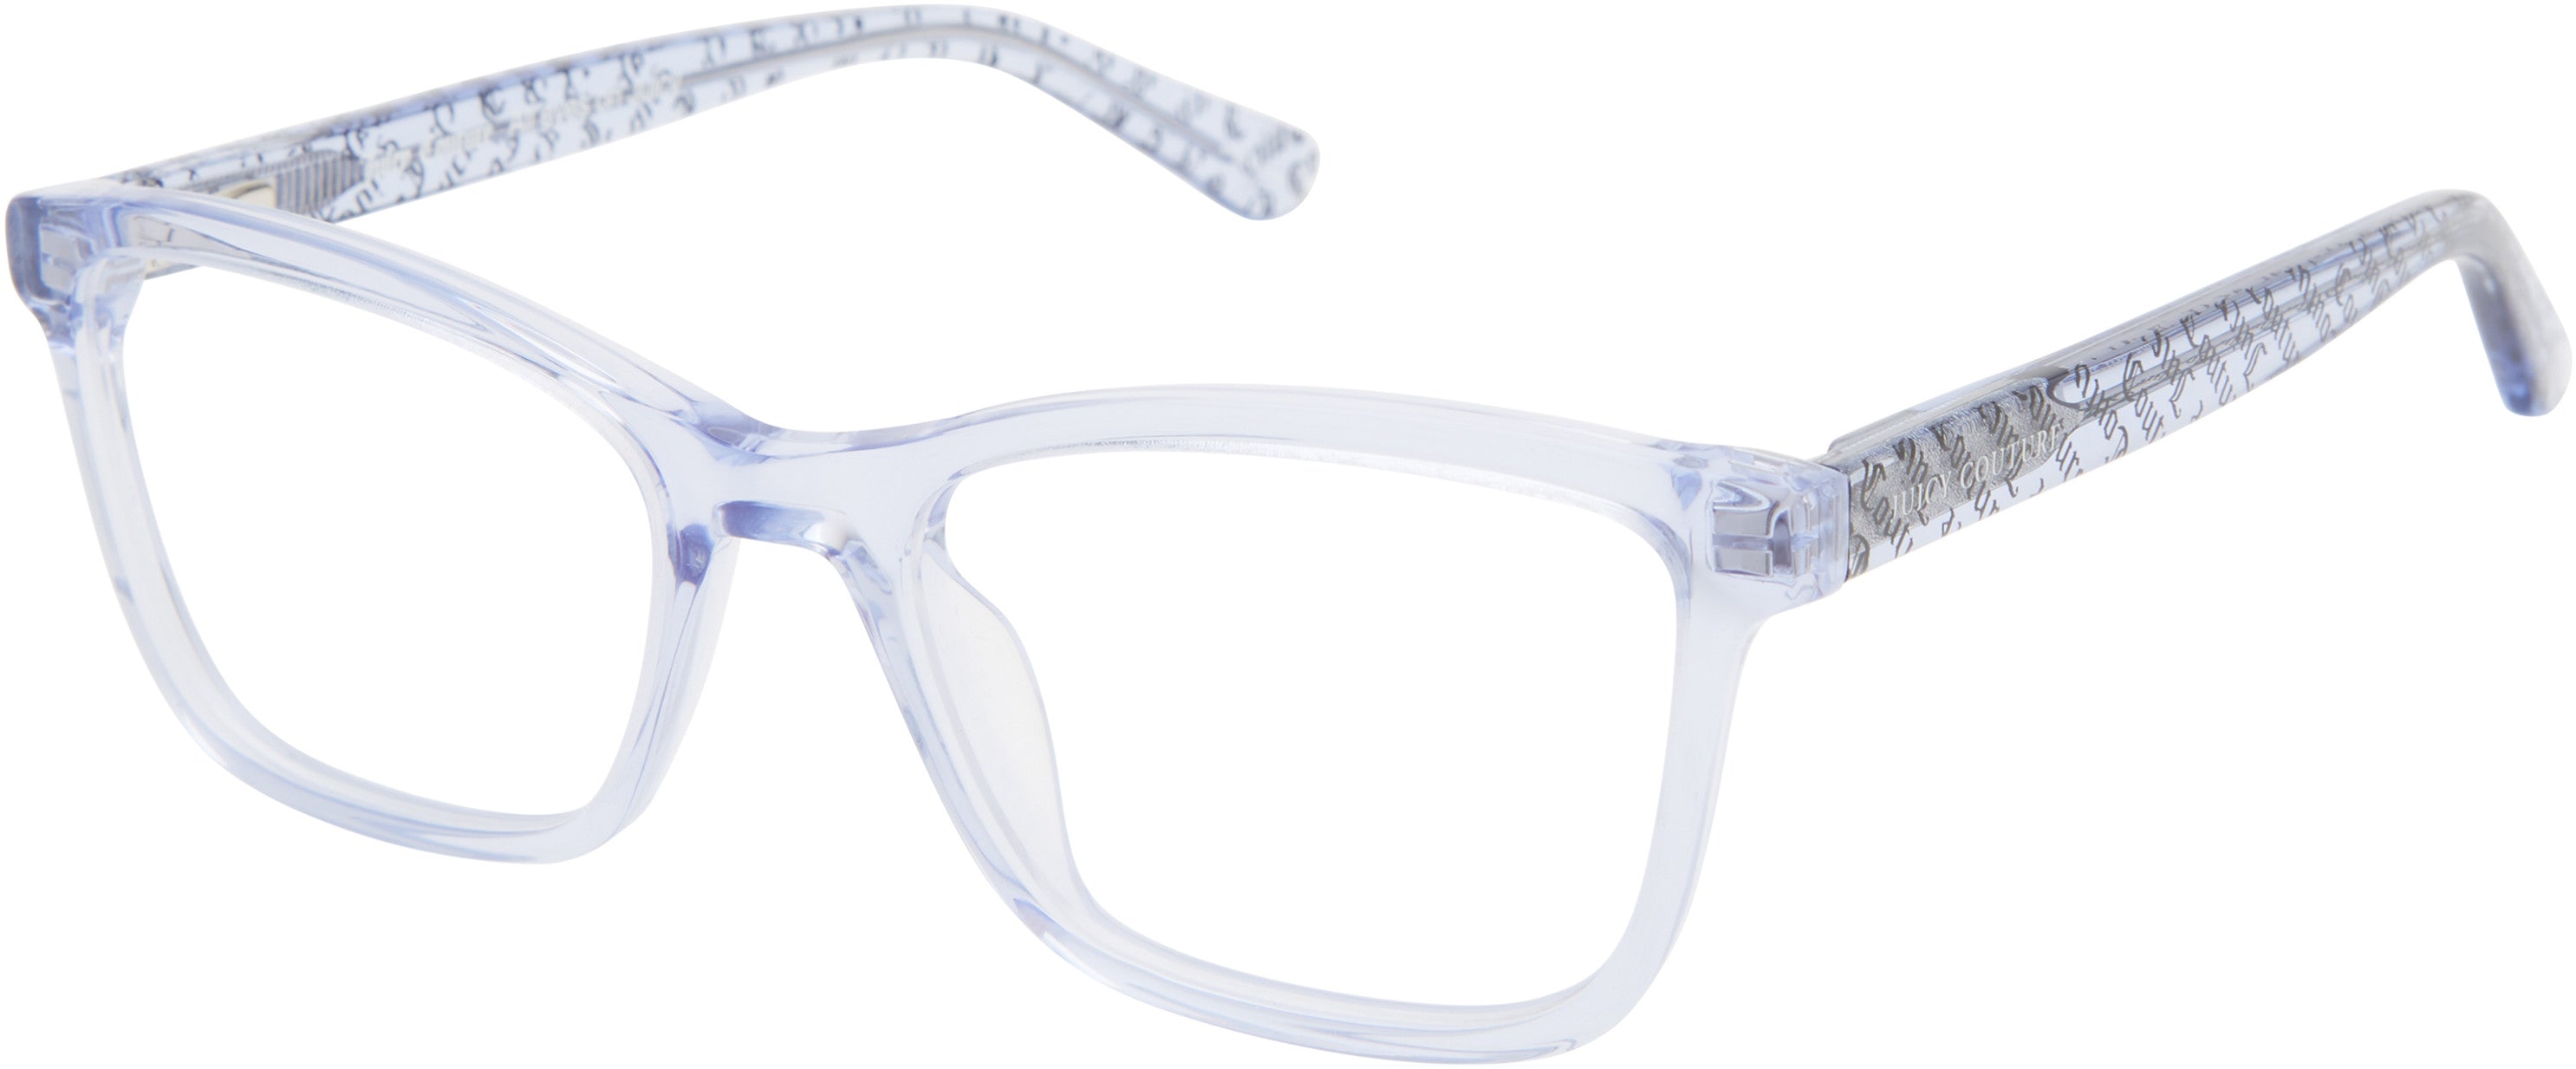 Juicy Couture Juicy 305 Rectangular Eyeglasses 0QM4-0QM4  Crystal Blue (00 Demo Lens)